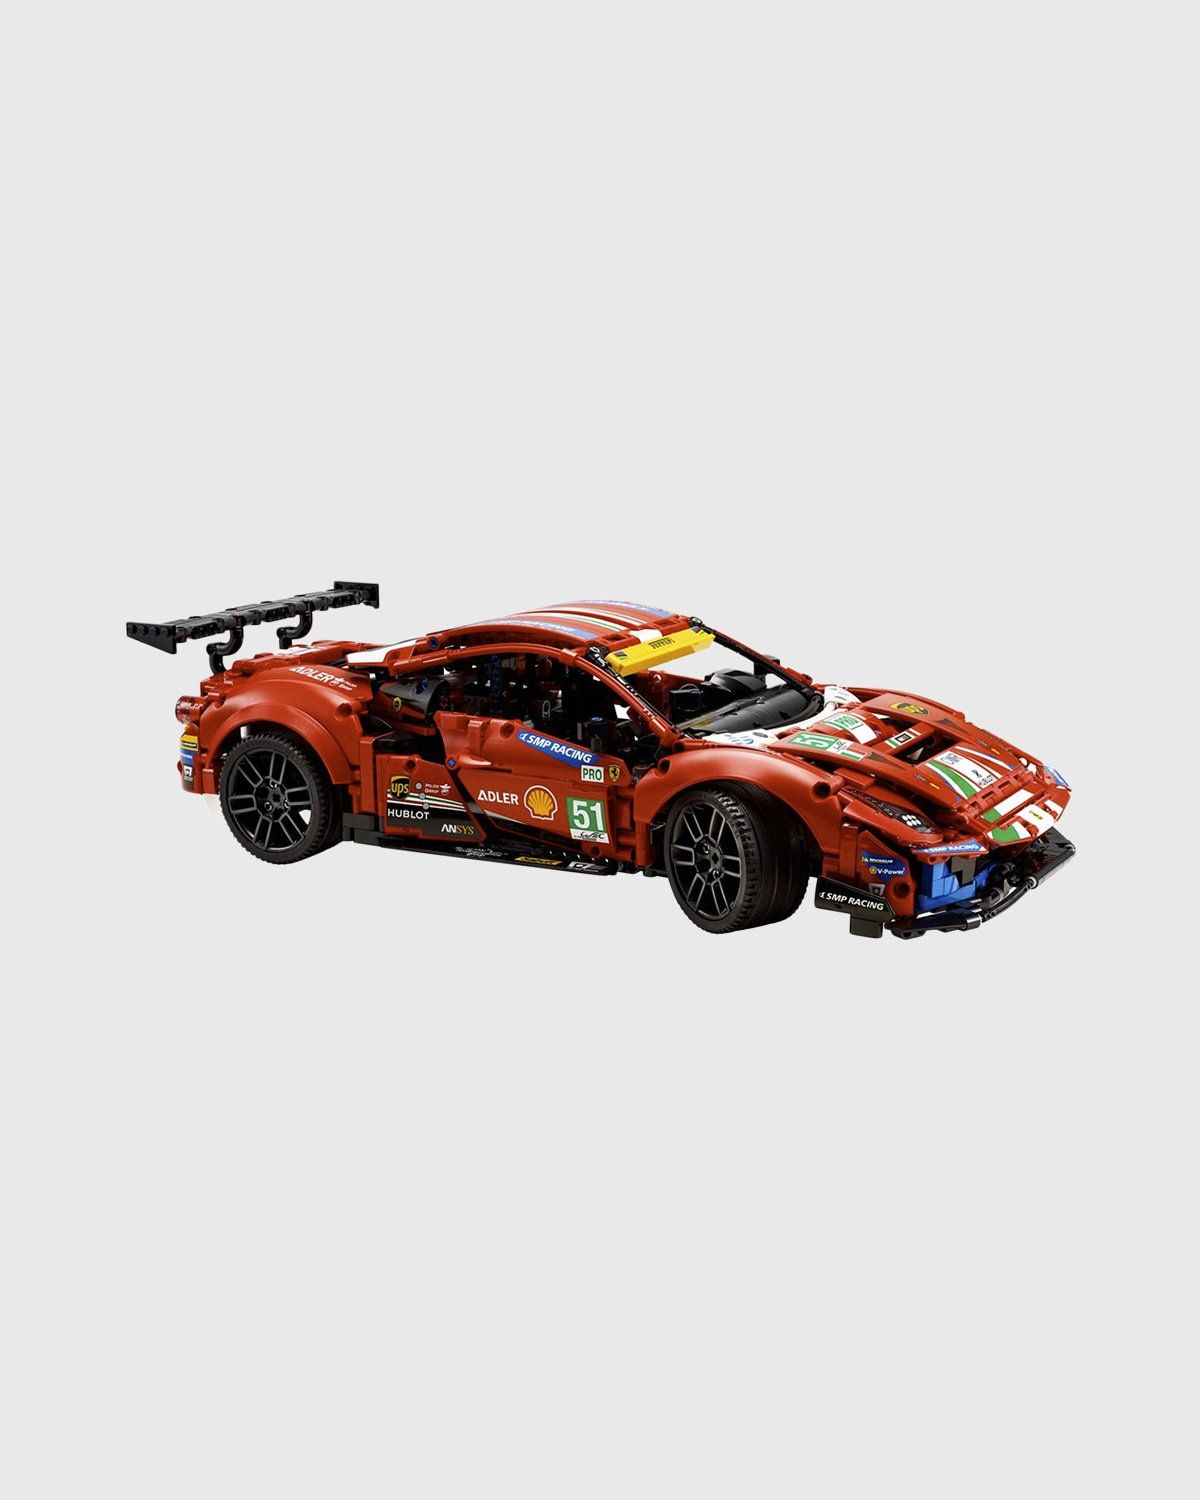 LEGO – Technic Ferrari 488 GTE AF Corse 51 Red - Image 1